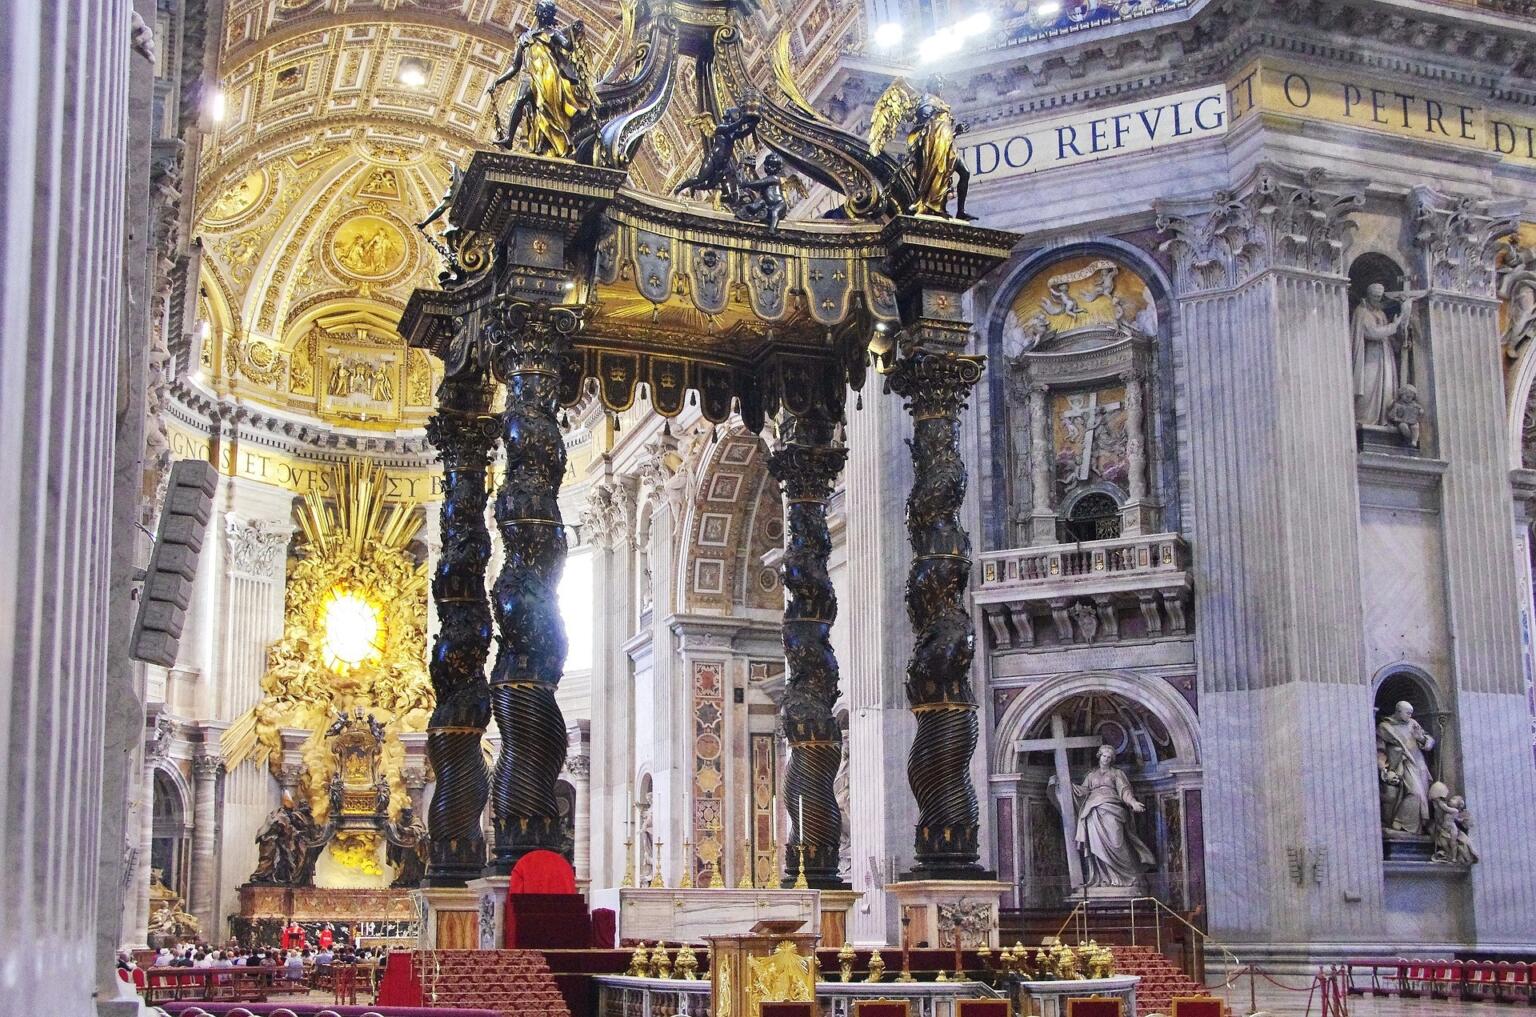  St Peter’s Tomb, The Vatican